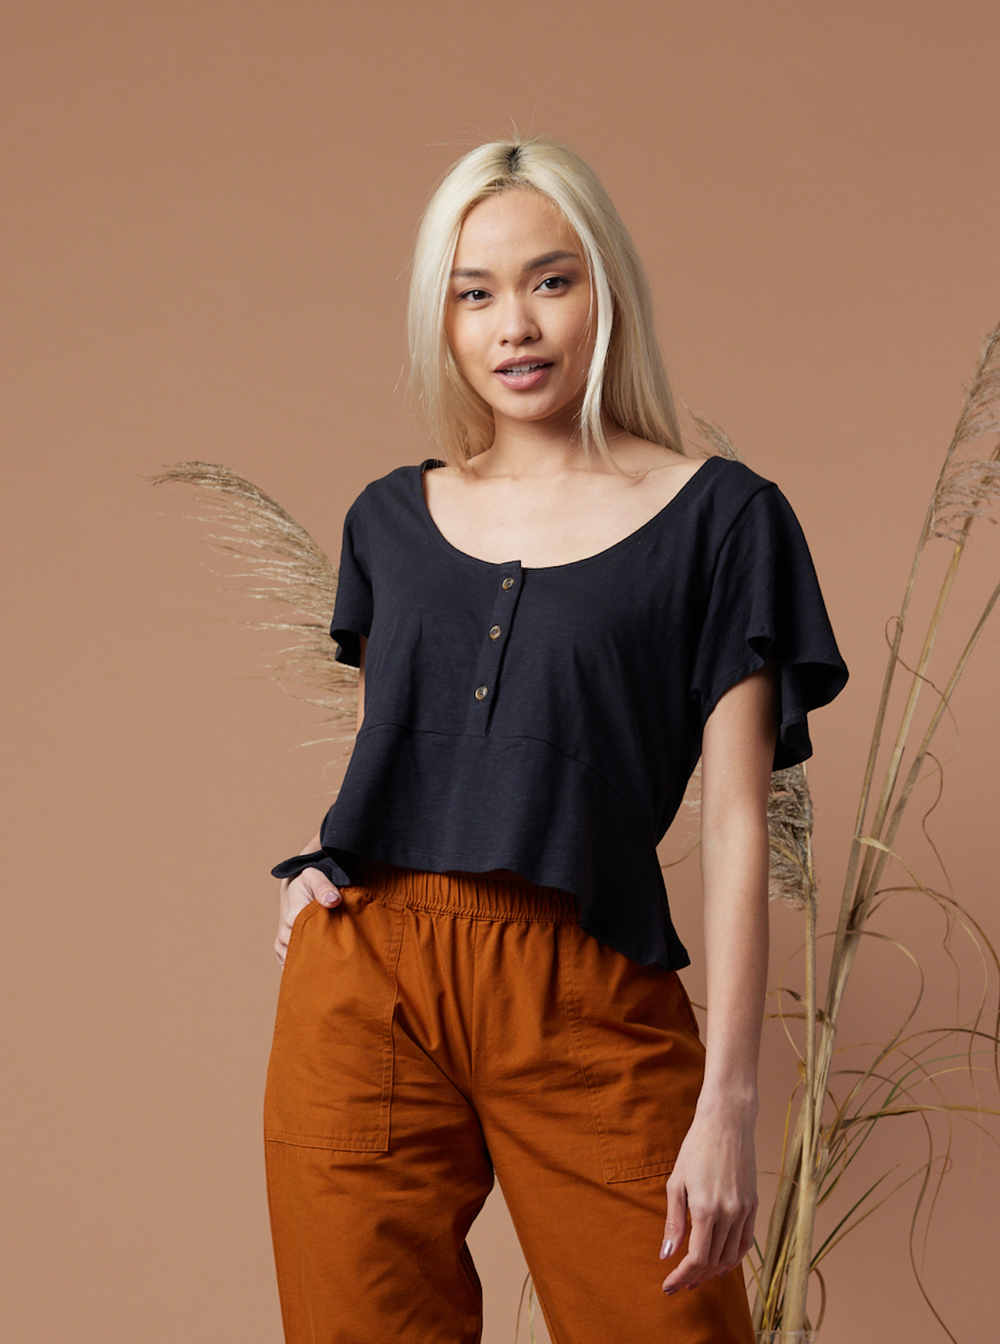 Known Supply Leonora shirt, organic cotton (2 colors) SALE Sizes L, 3X